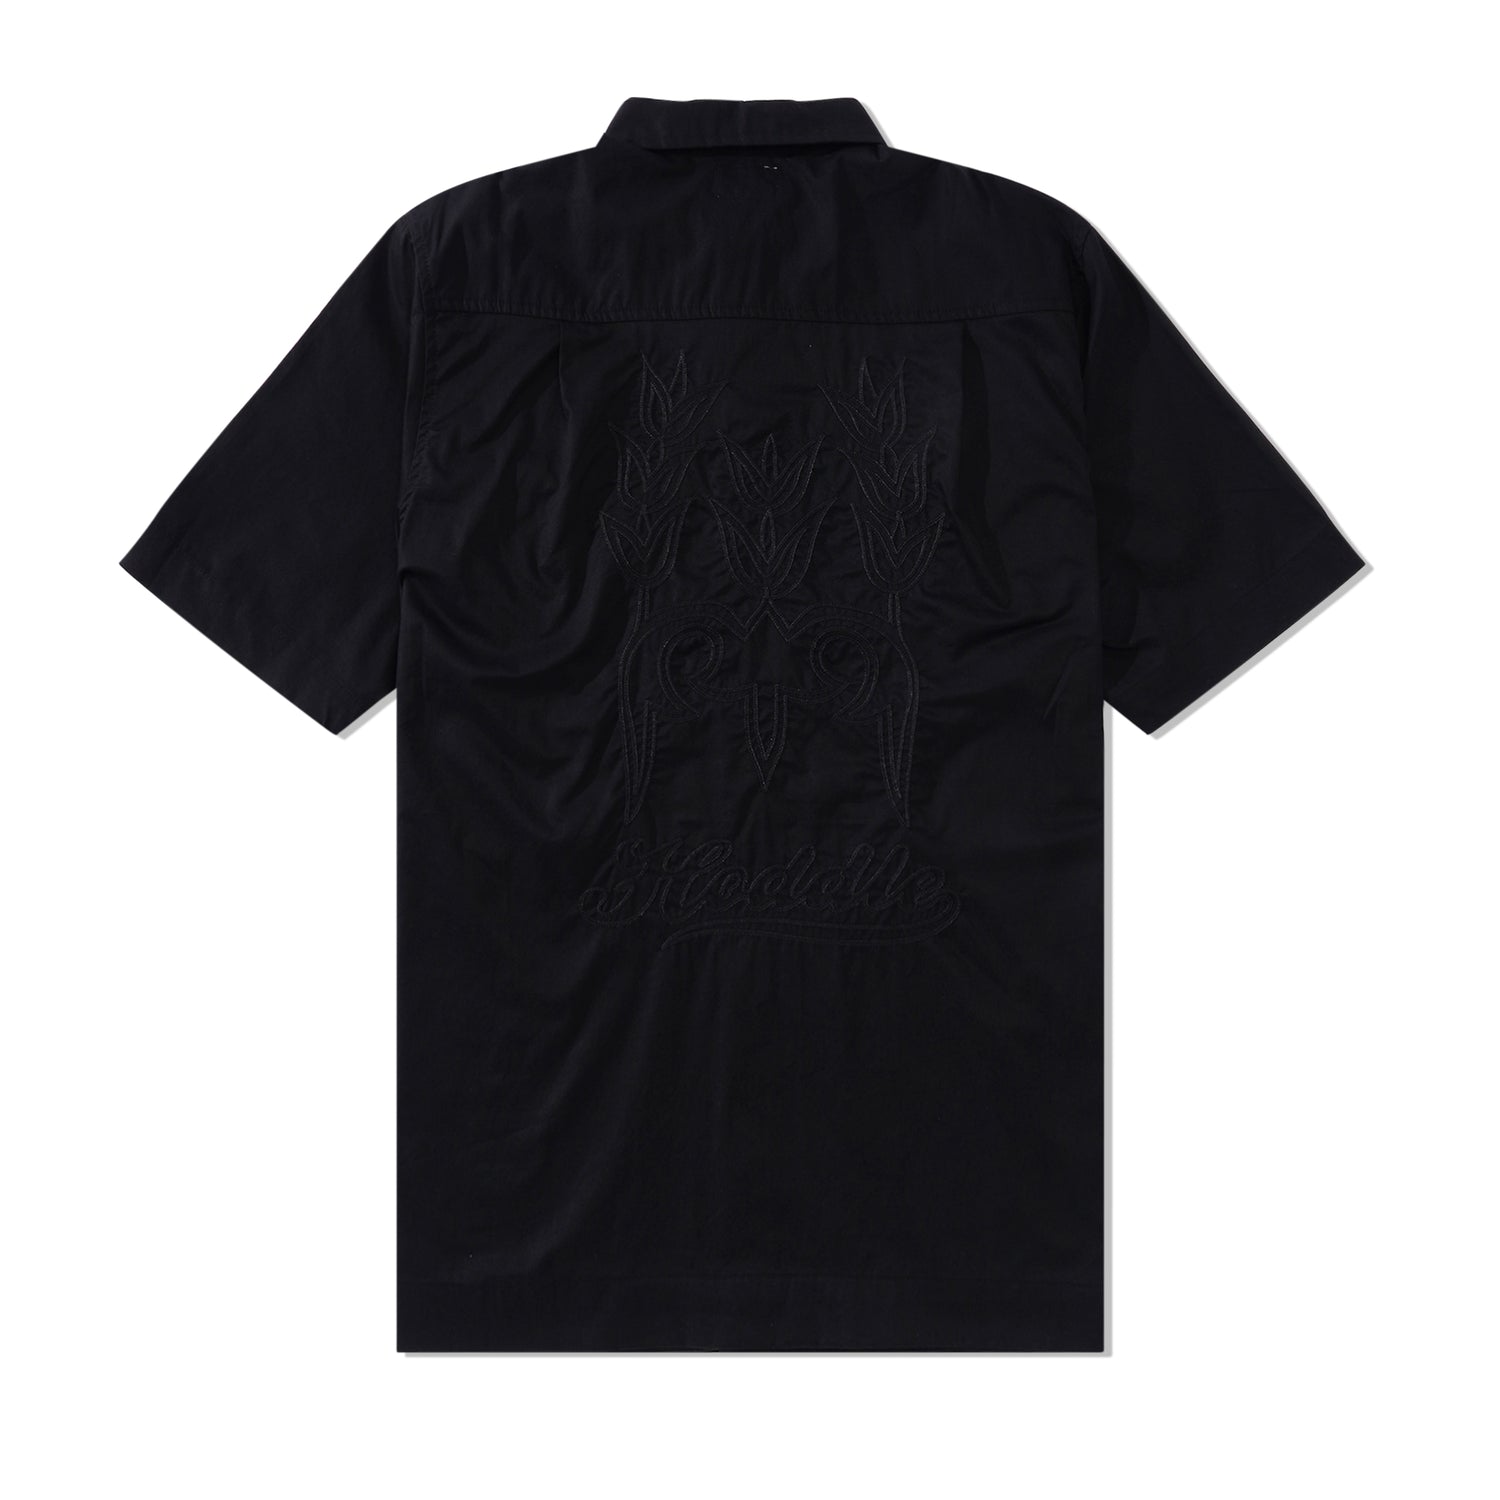 Cheval S/S Shirt, Black